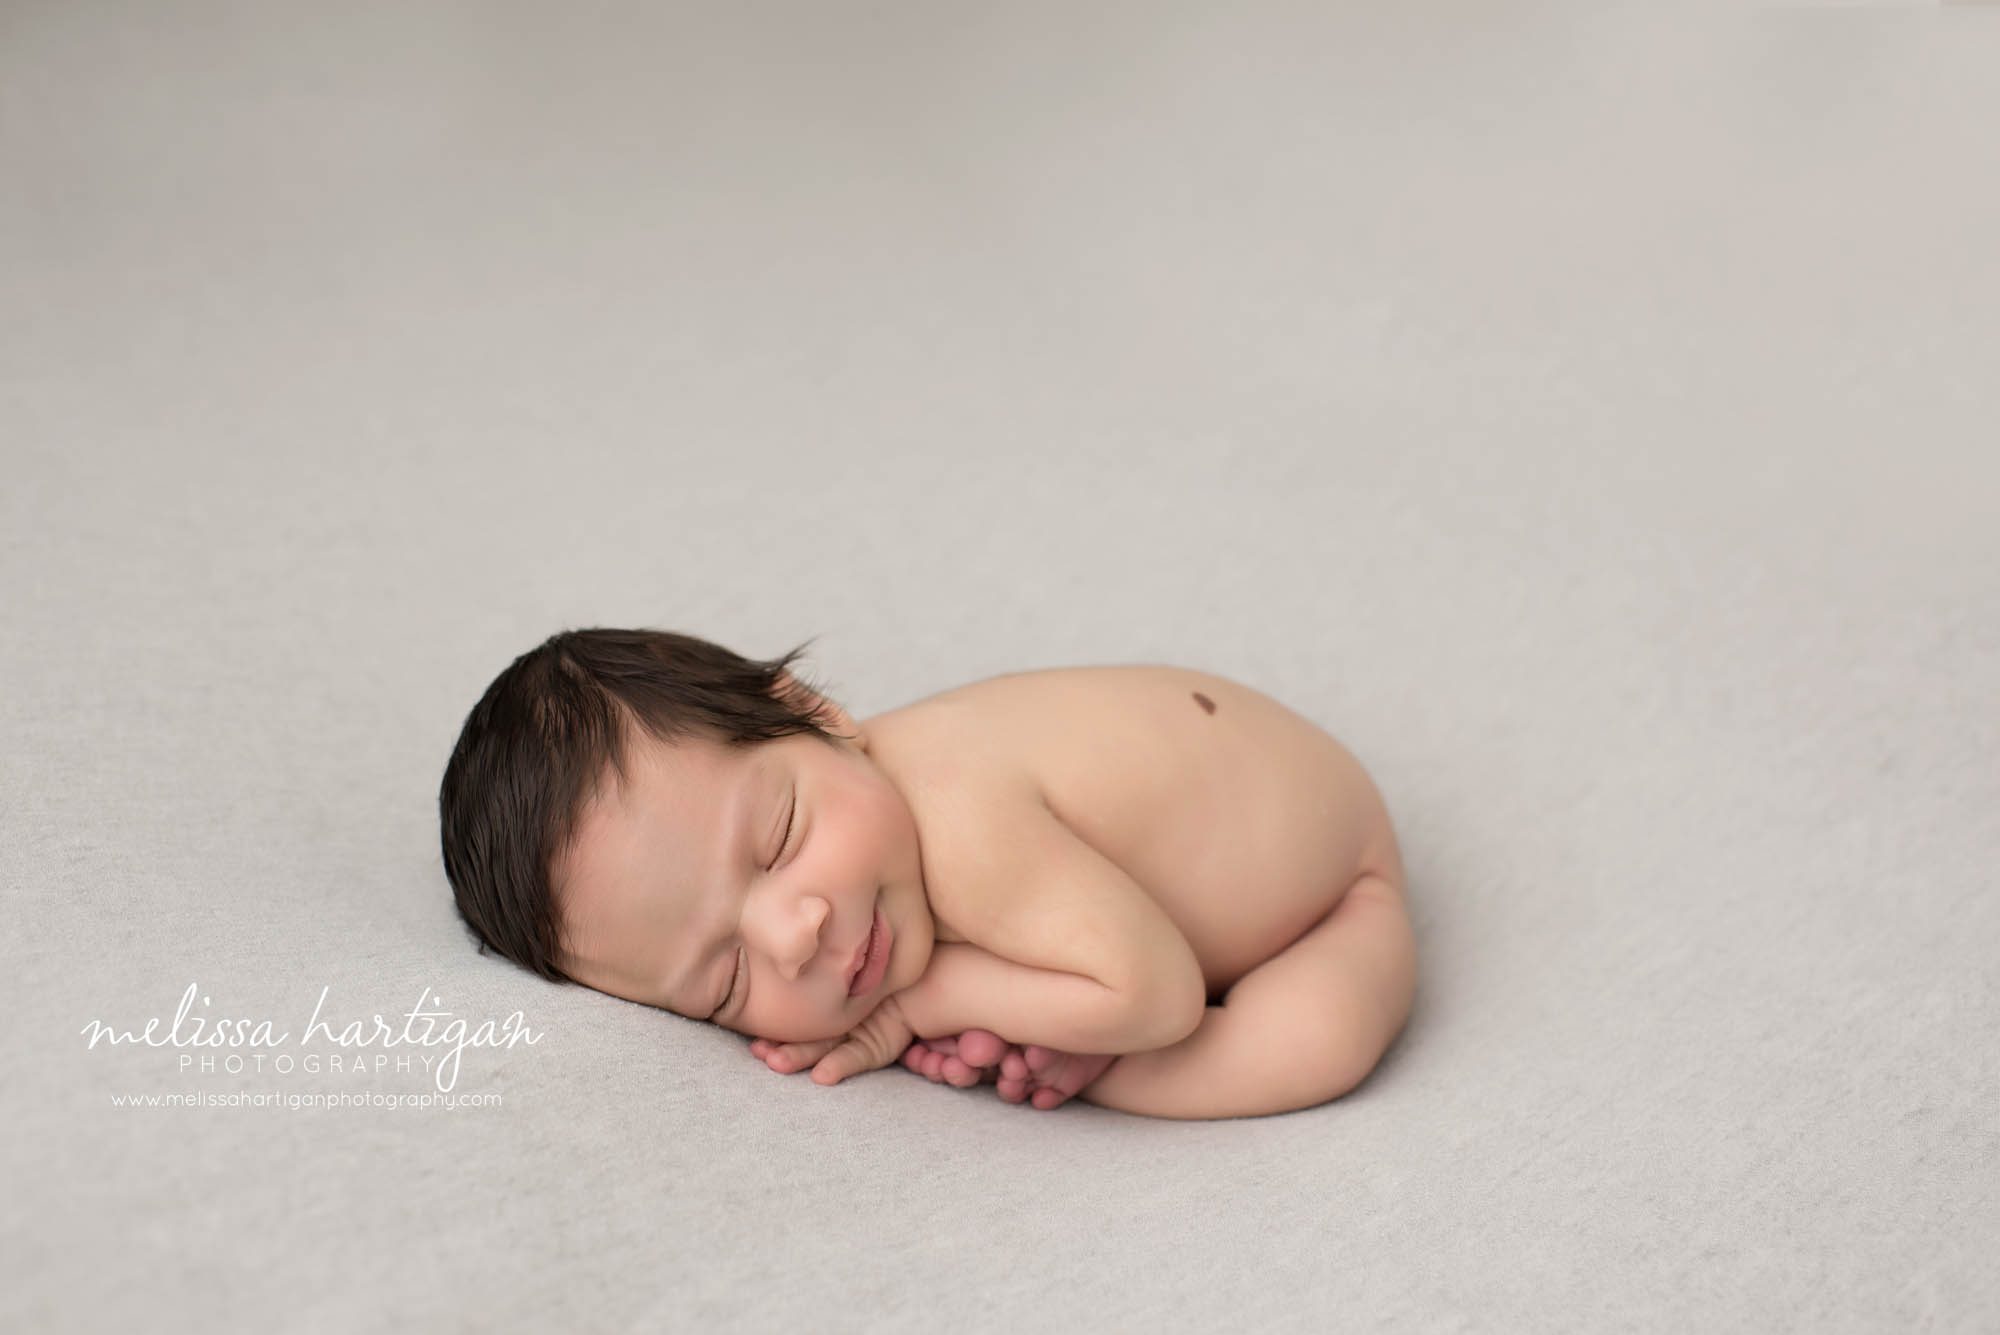 Melissa Hartigan Photography CT Newborn Photographer East Hartford baby boy sleeping on blue blanket smiling curled up